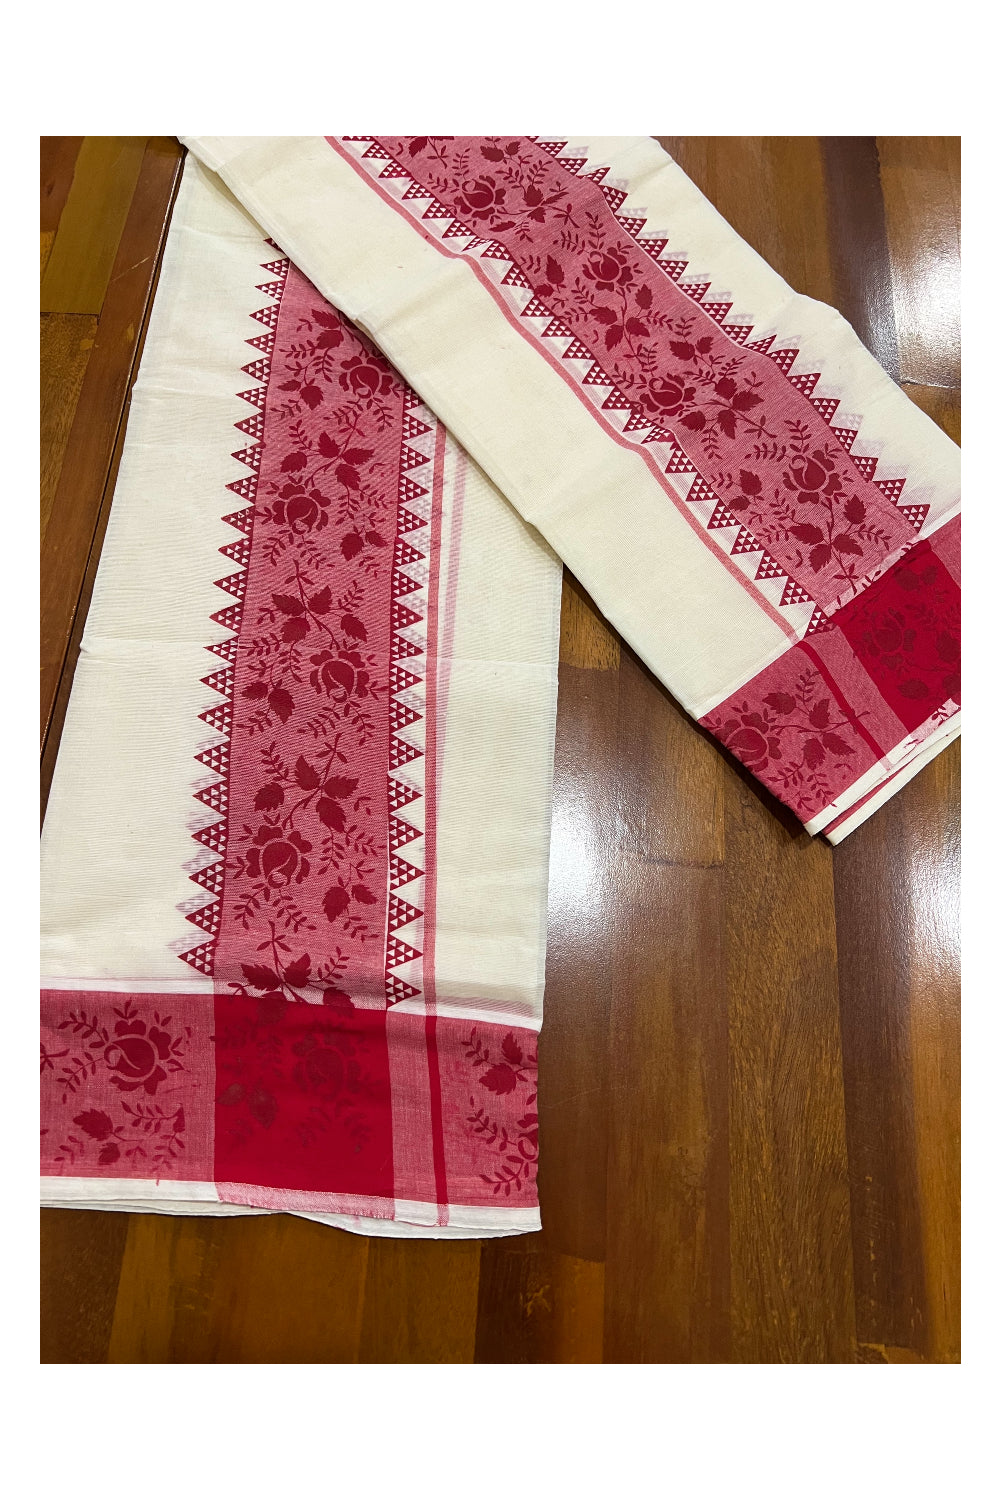 Kerala Cotton Set Mundu (Mundum Neriyathum) with Red Floral Temple Block Prints on Border